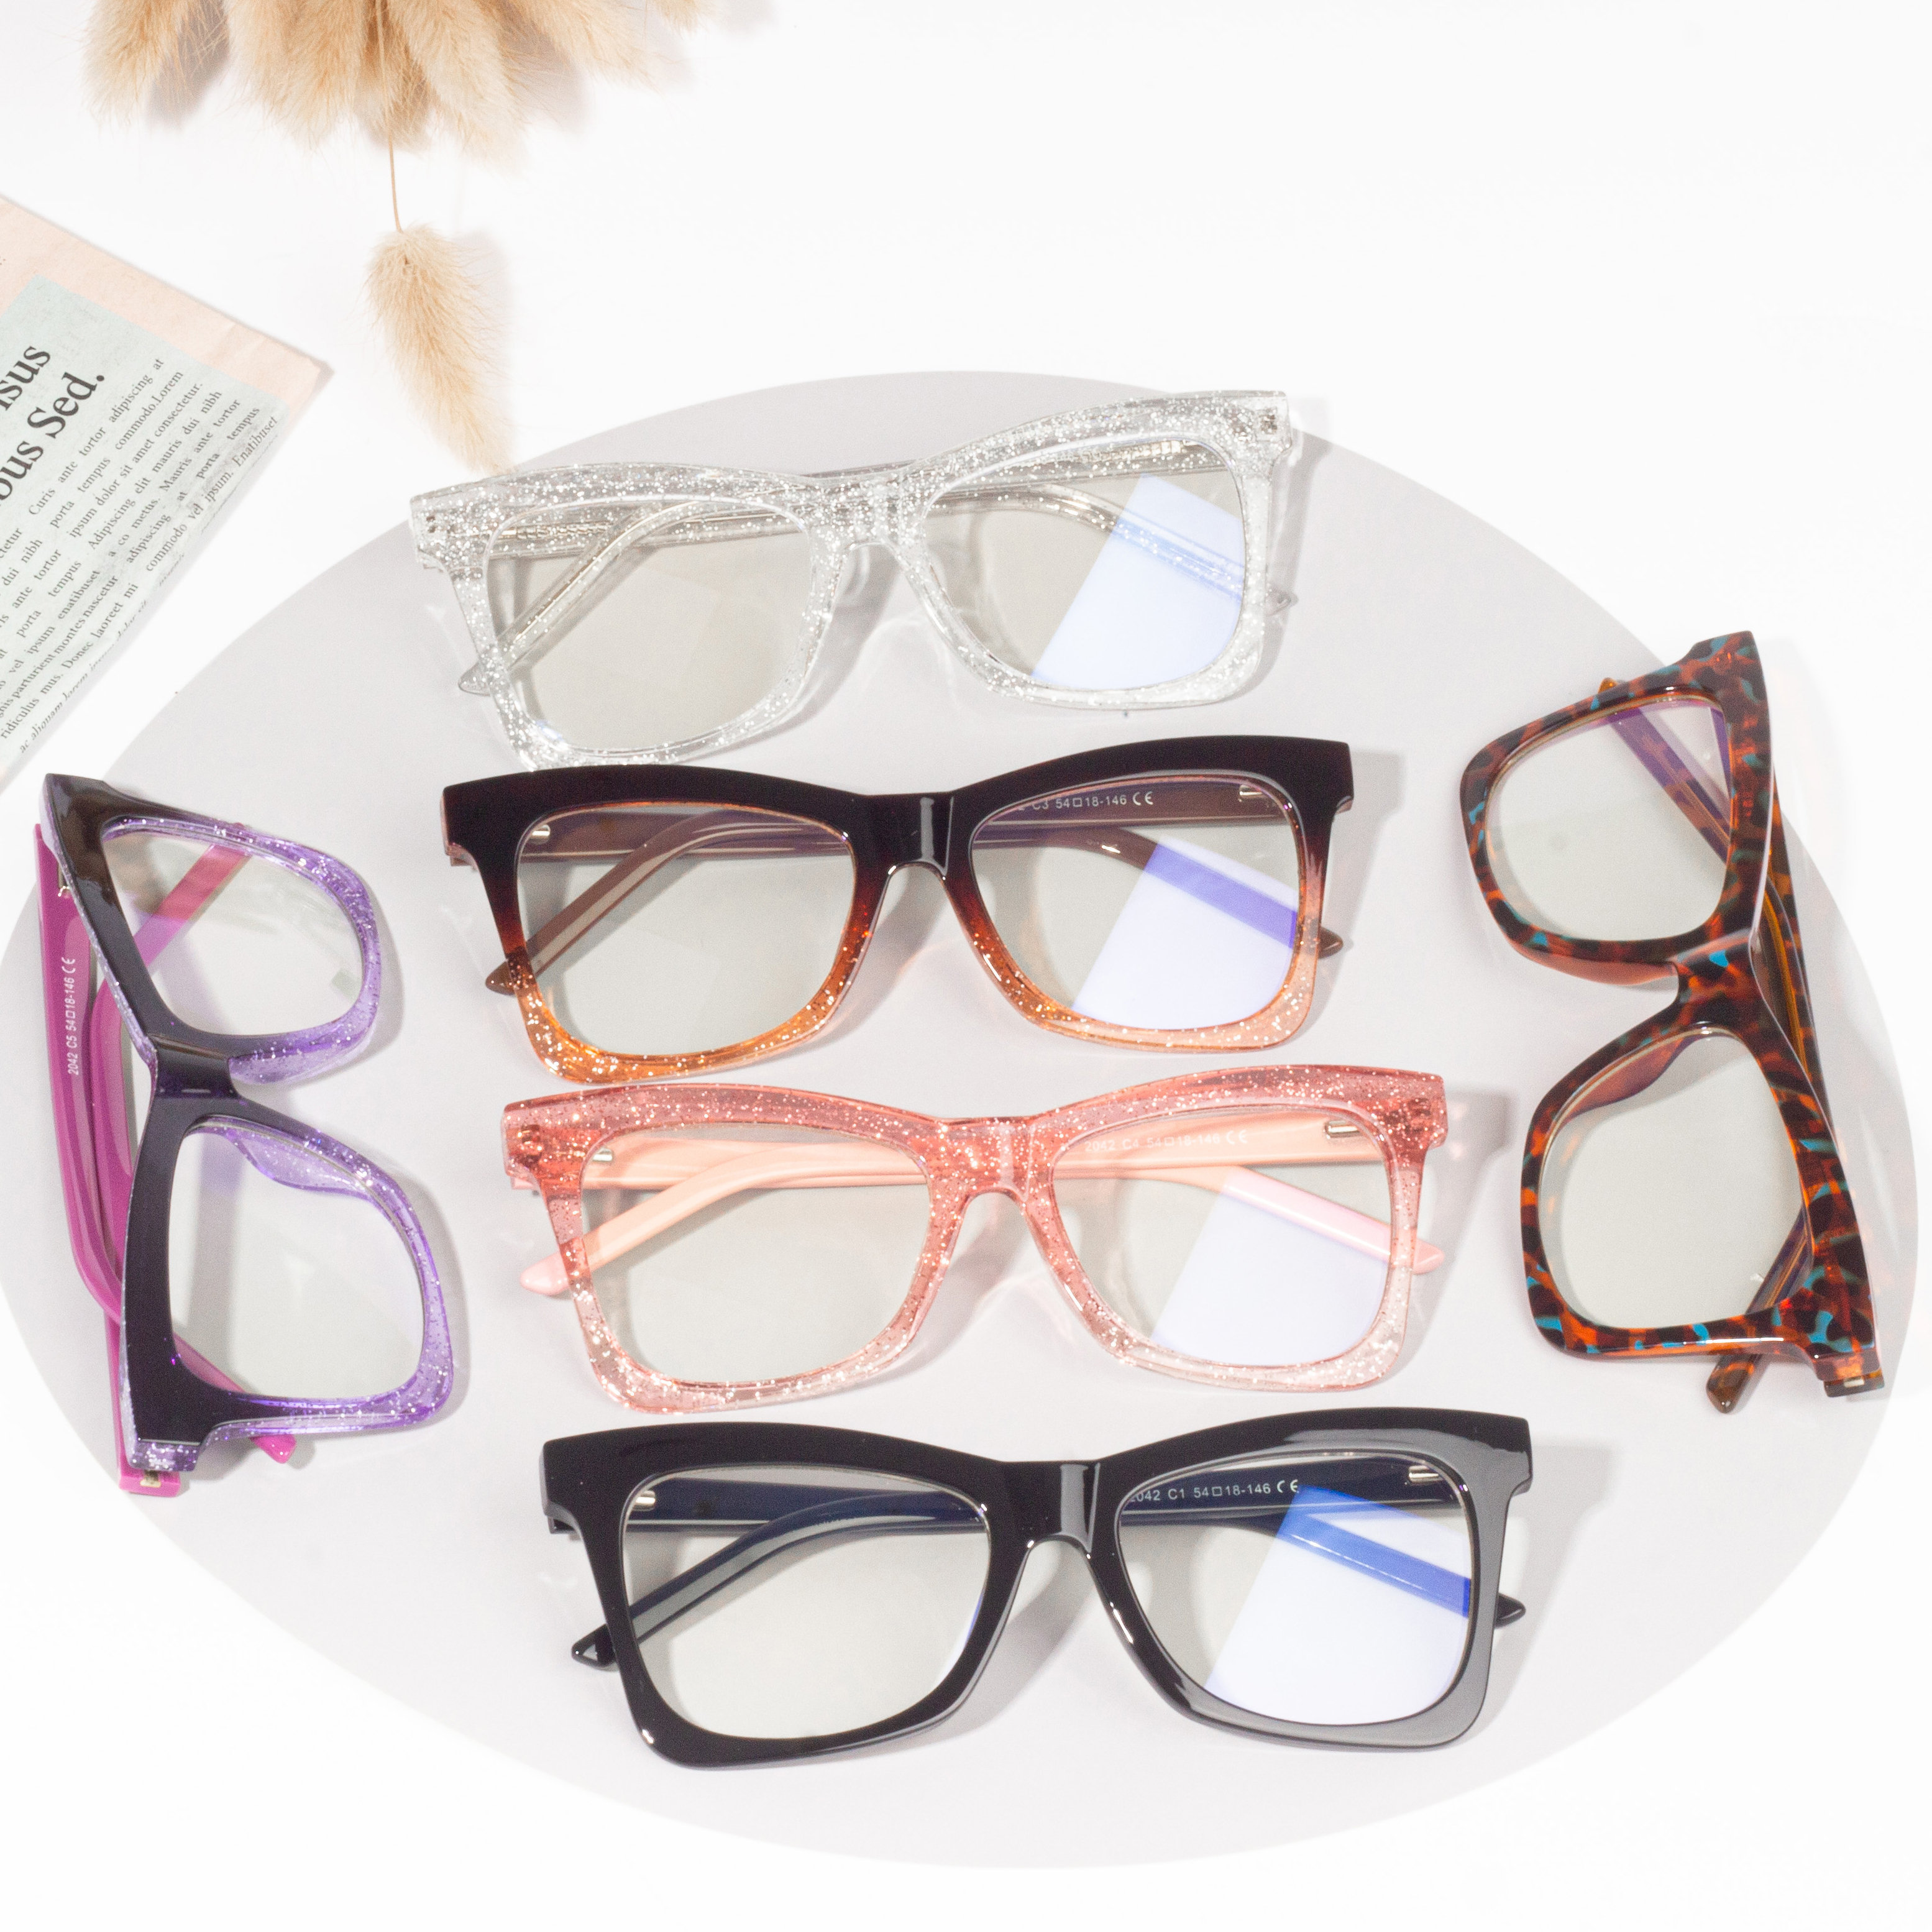 bingkai kacamata desainer wanita